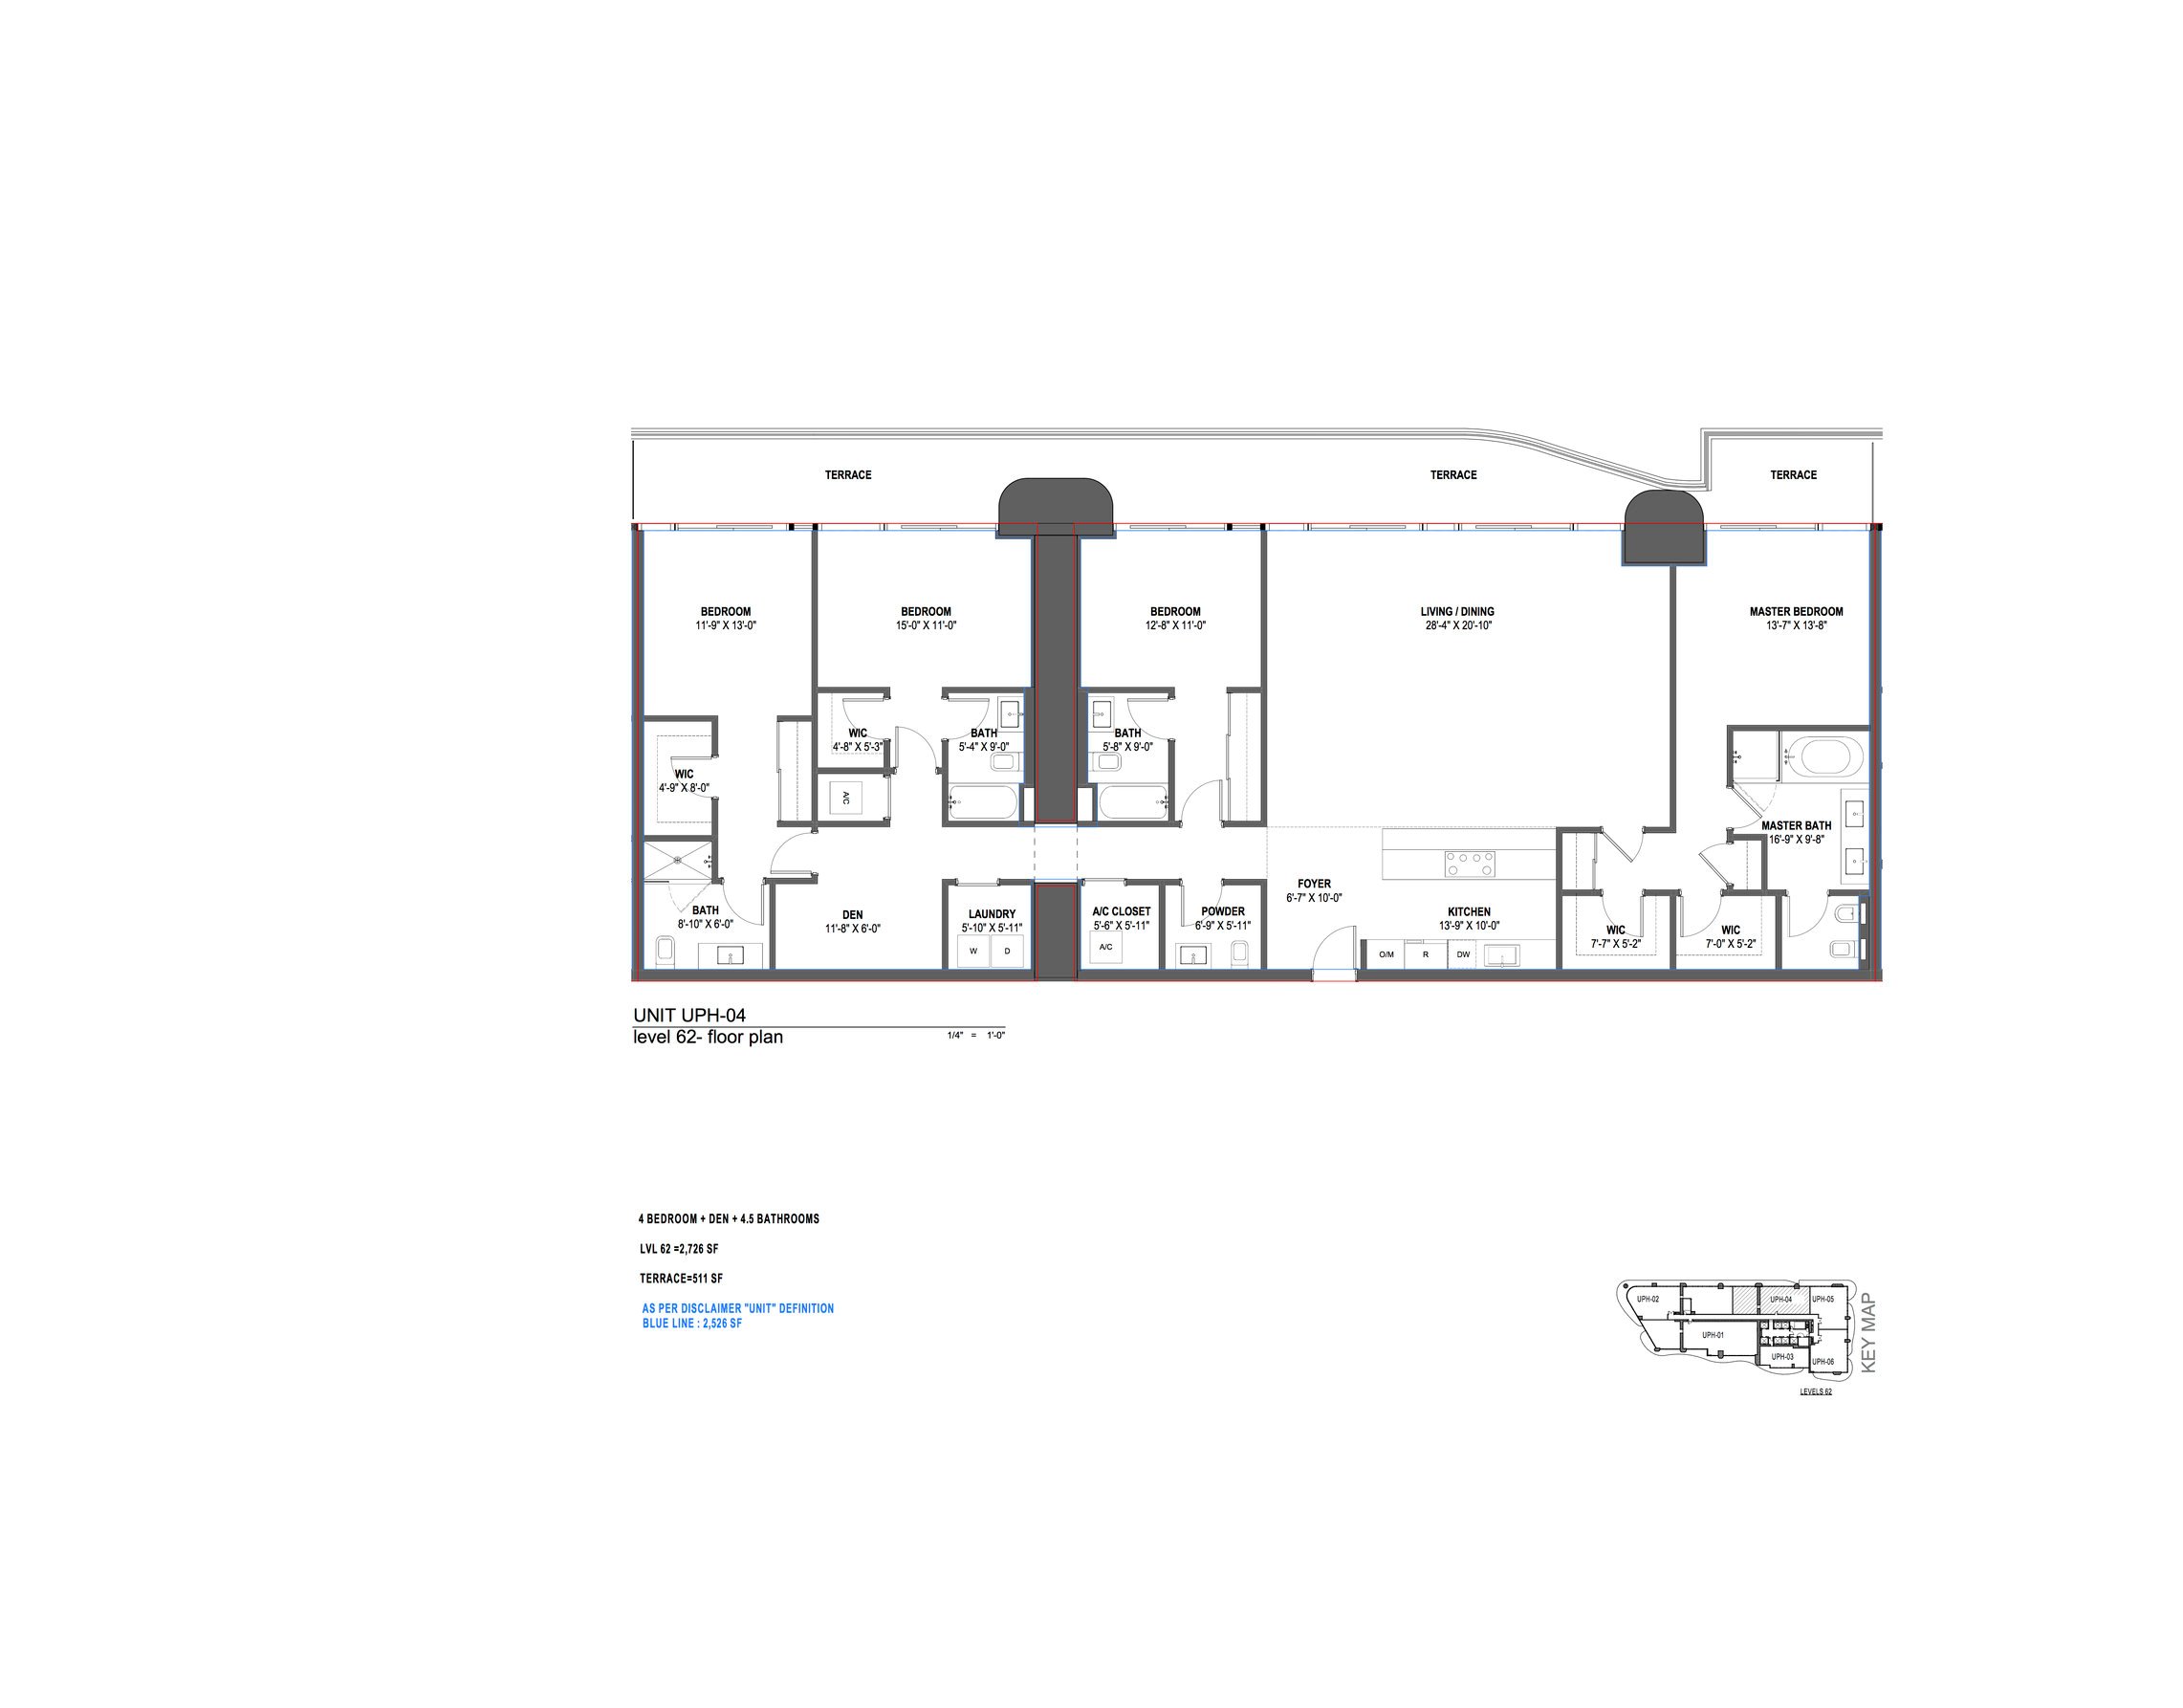 Brickell Flatiron Upper Penthouse 04 Level 62